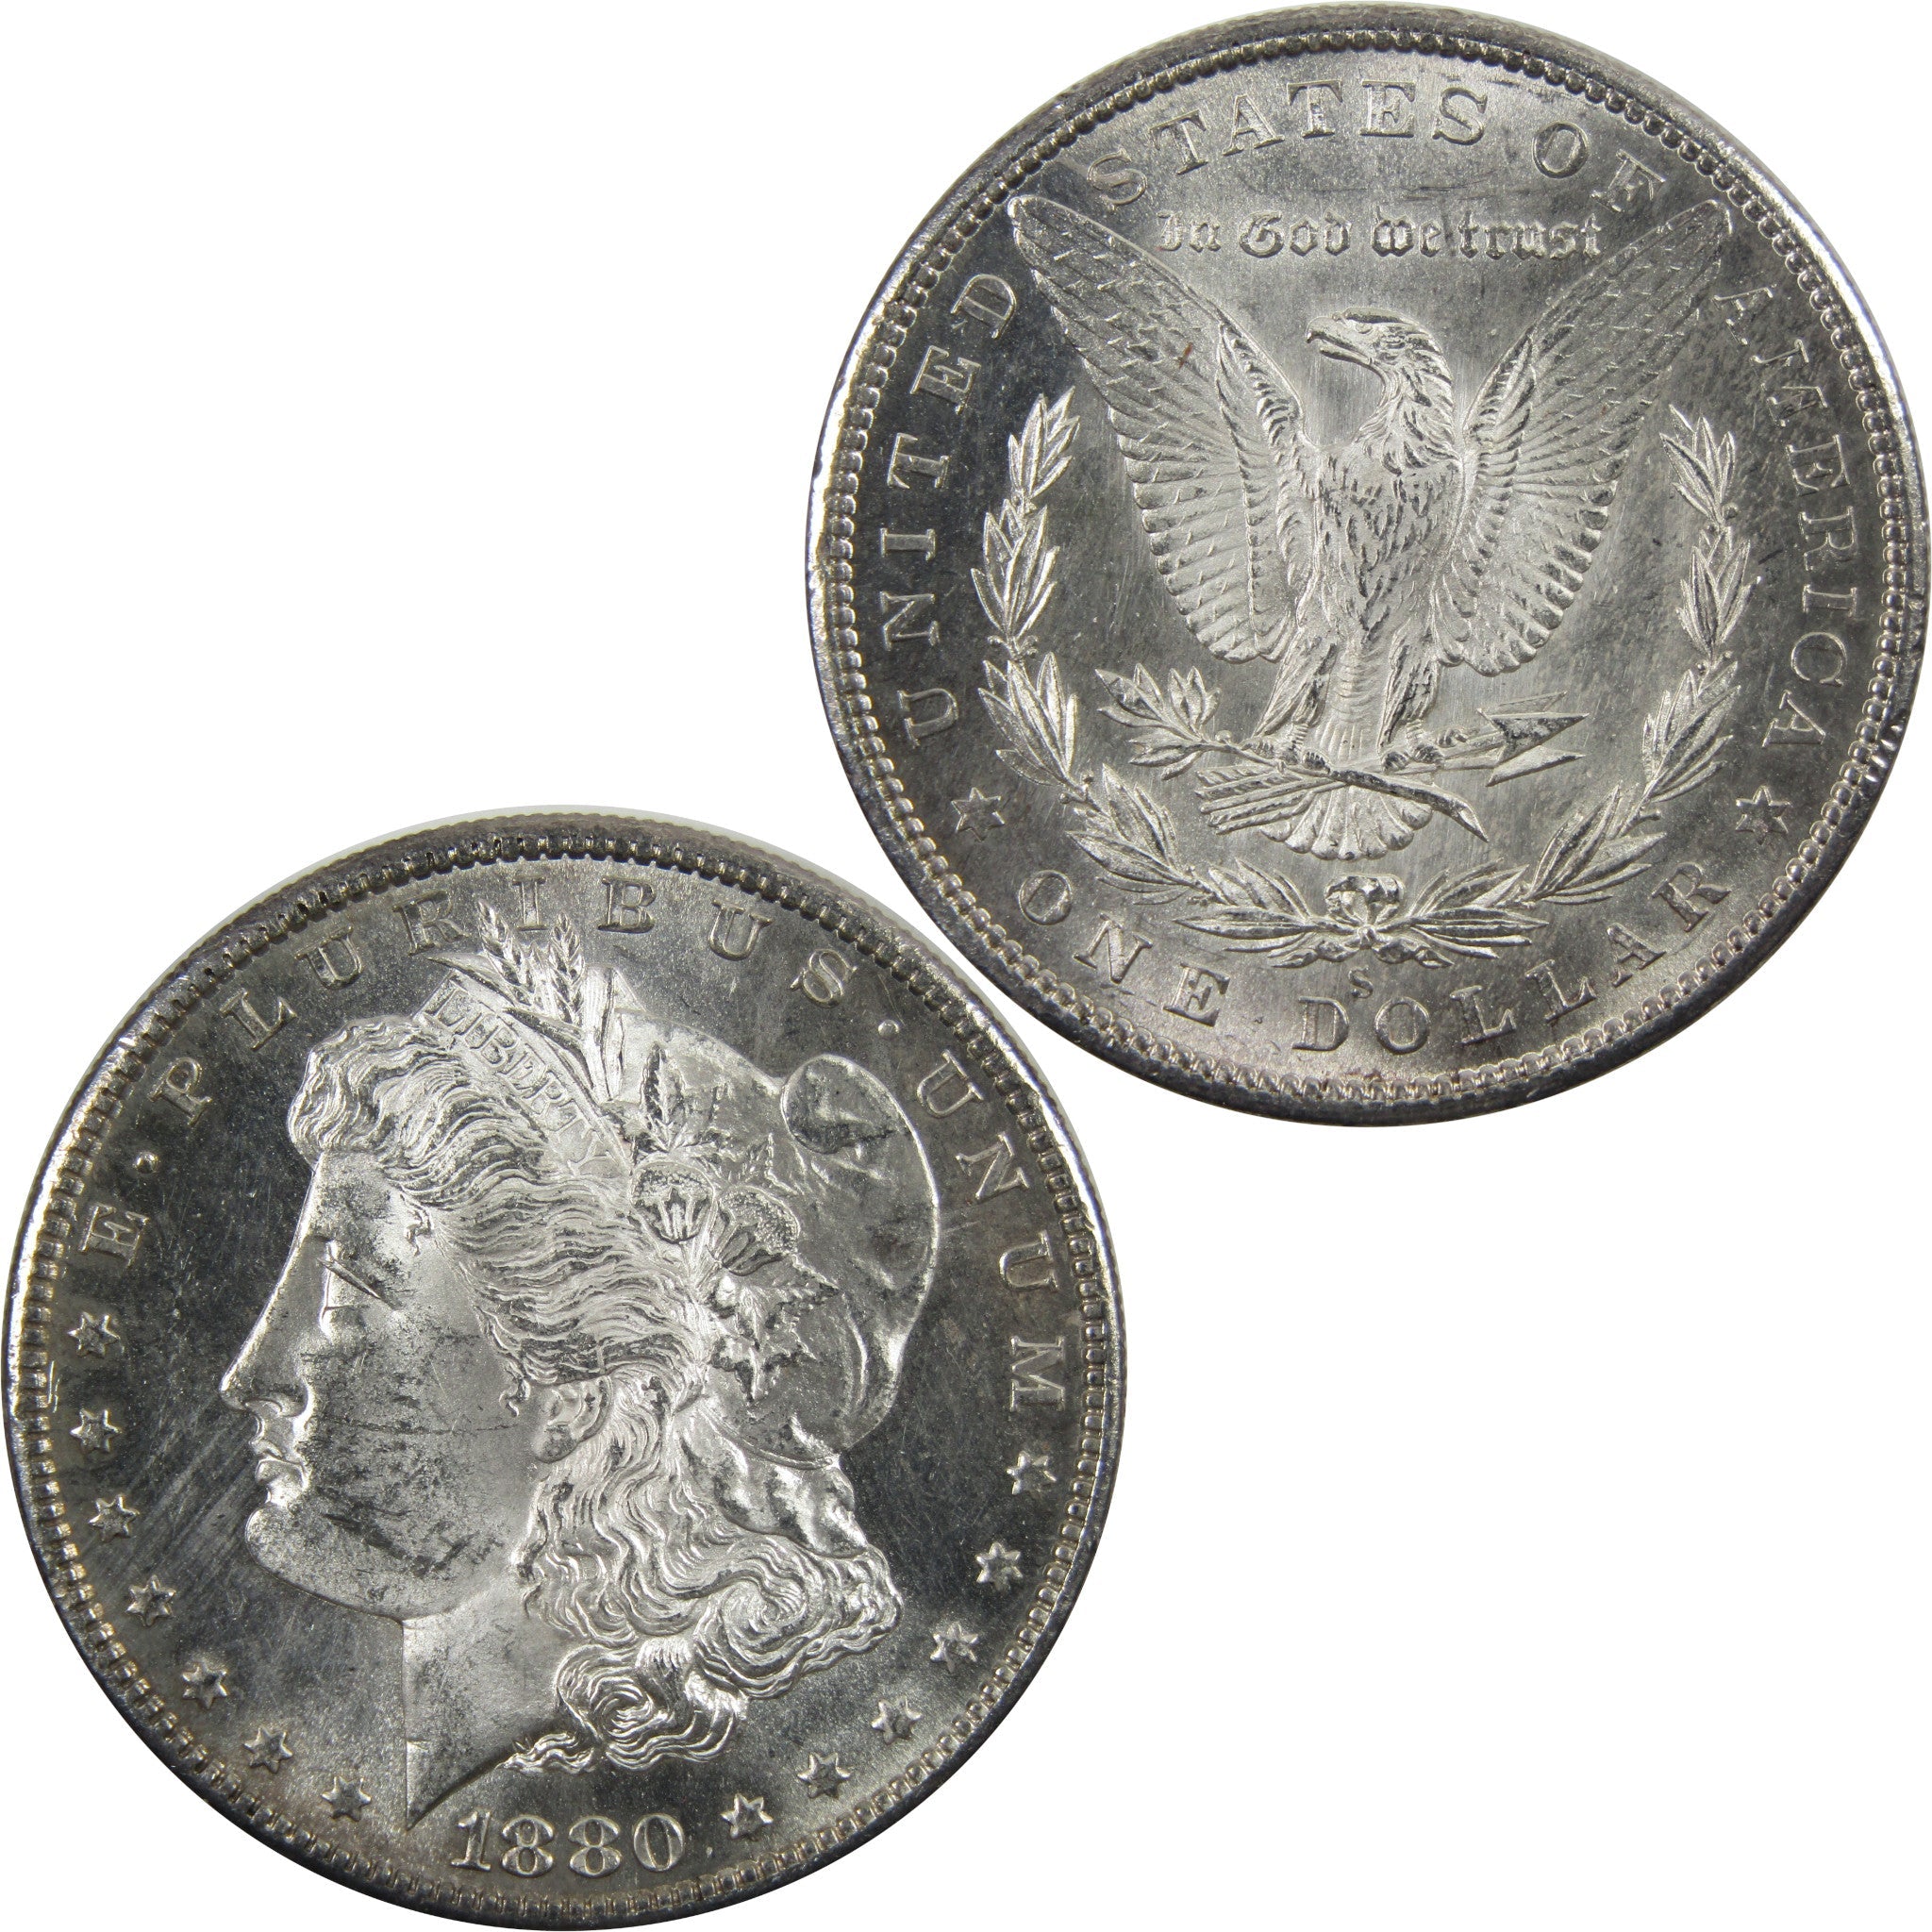 1880 S Morgan Dollar BU Uncirculated 90% Silver $1 Coin SKU:I5439 - Morgan coin - Morgan silver dollar - Morgan silver dollar for sale - Profile Coins &amp; Collectibles